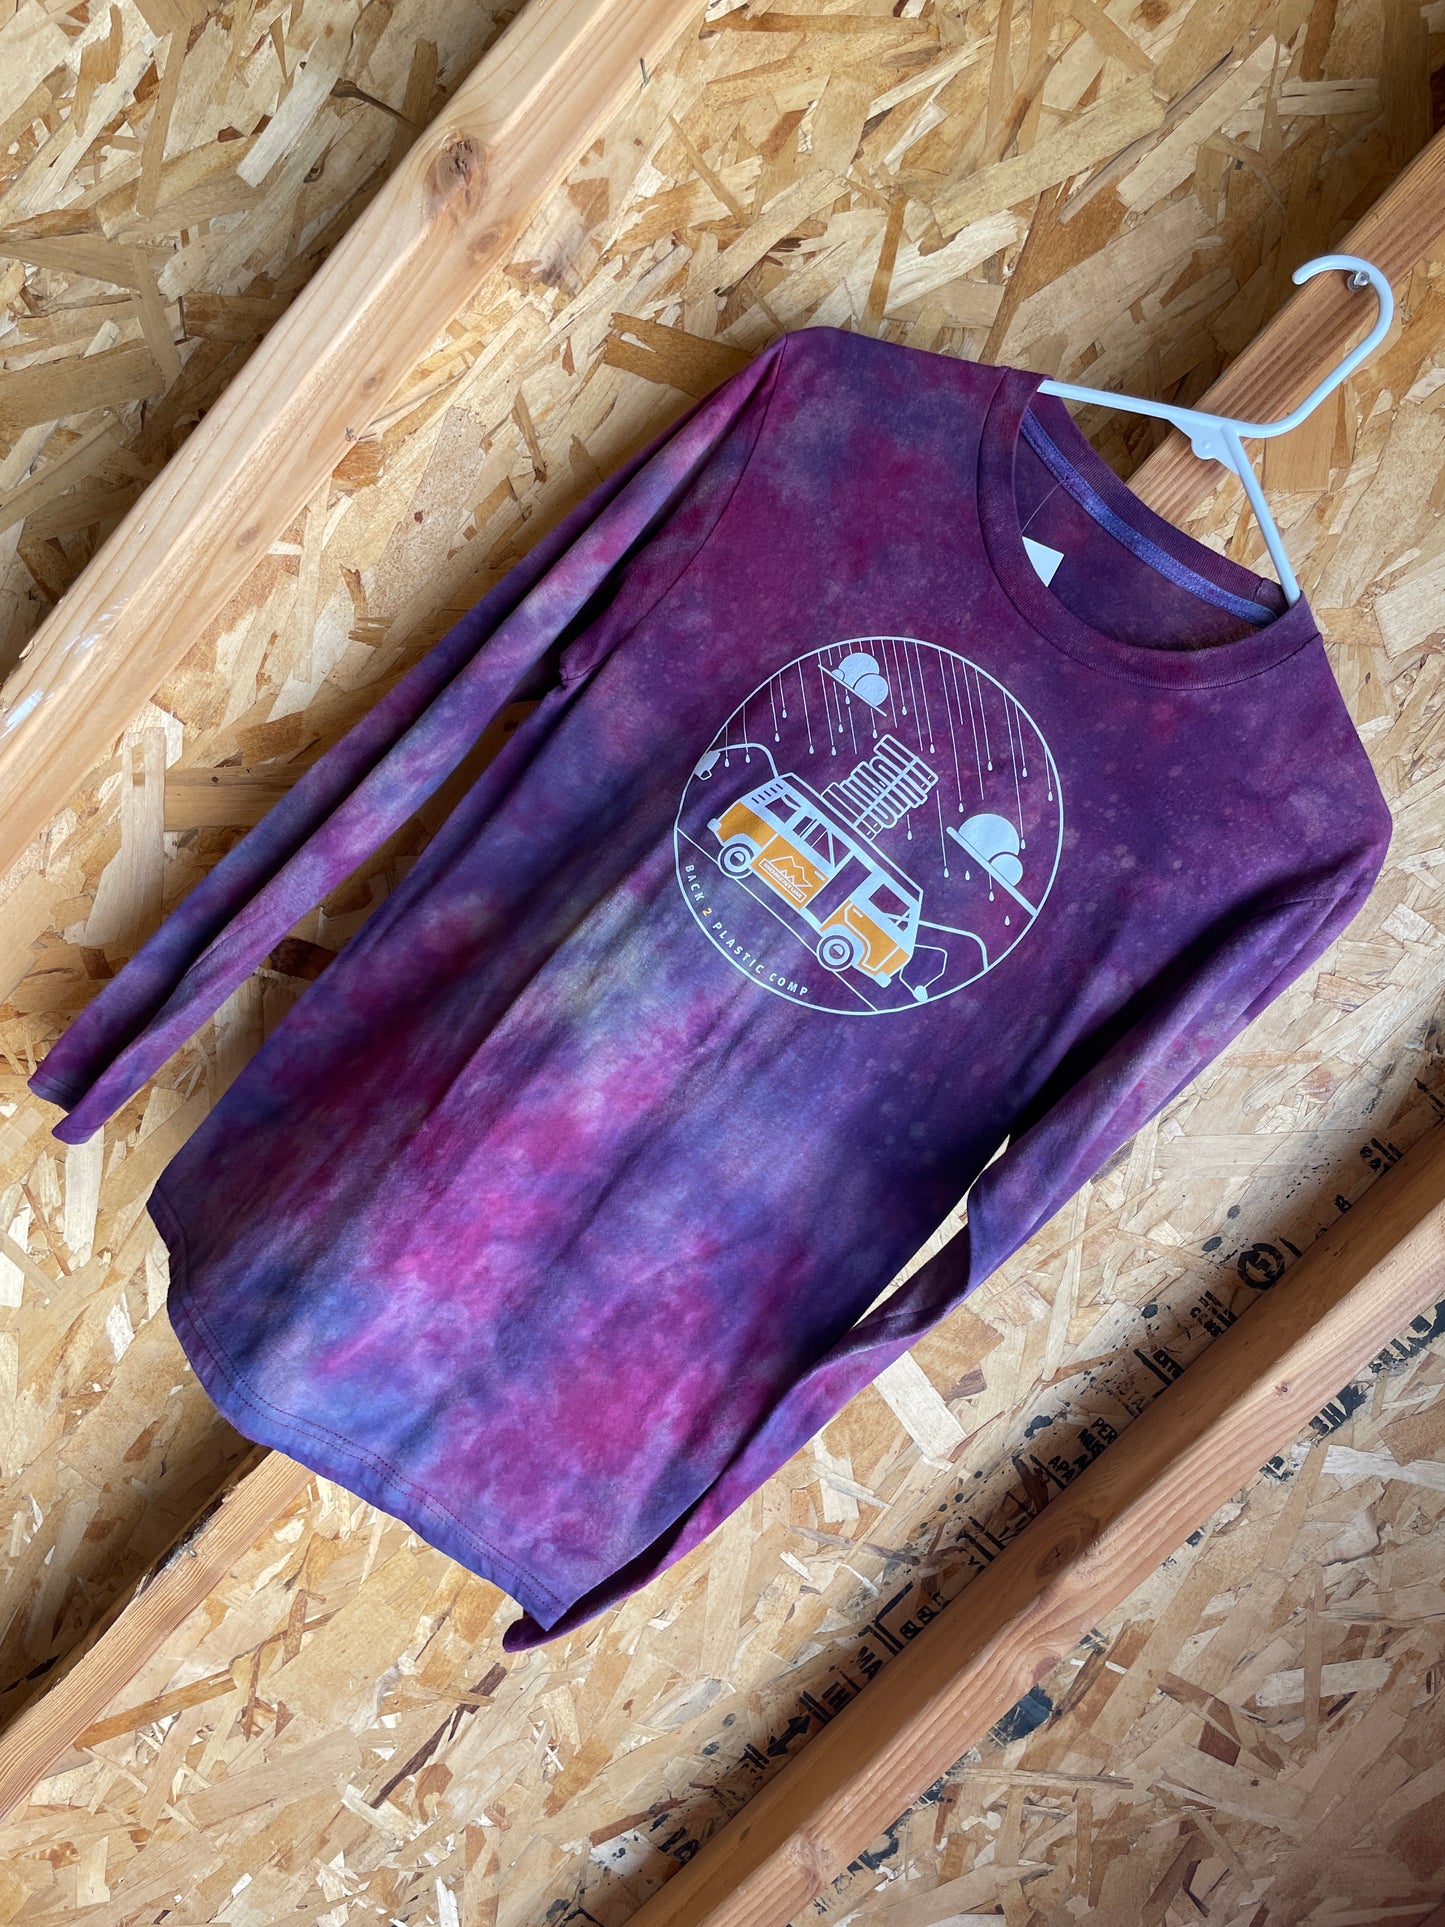 Small Men’s Momentum Climbing Handmade Tie Dye T-Shirt | Purple and Plum Galaxy Ice Dye Tie Dye Long Sleeve